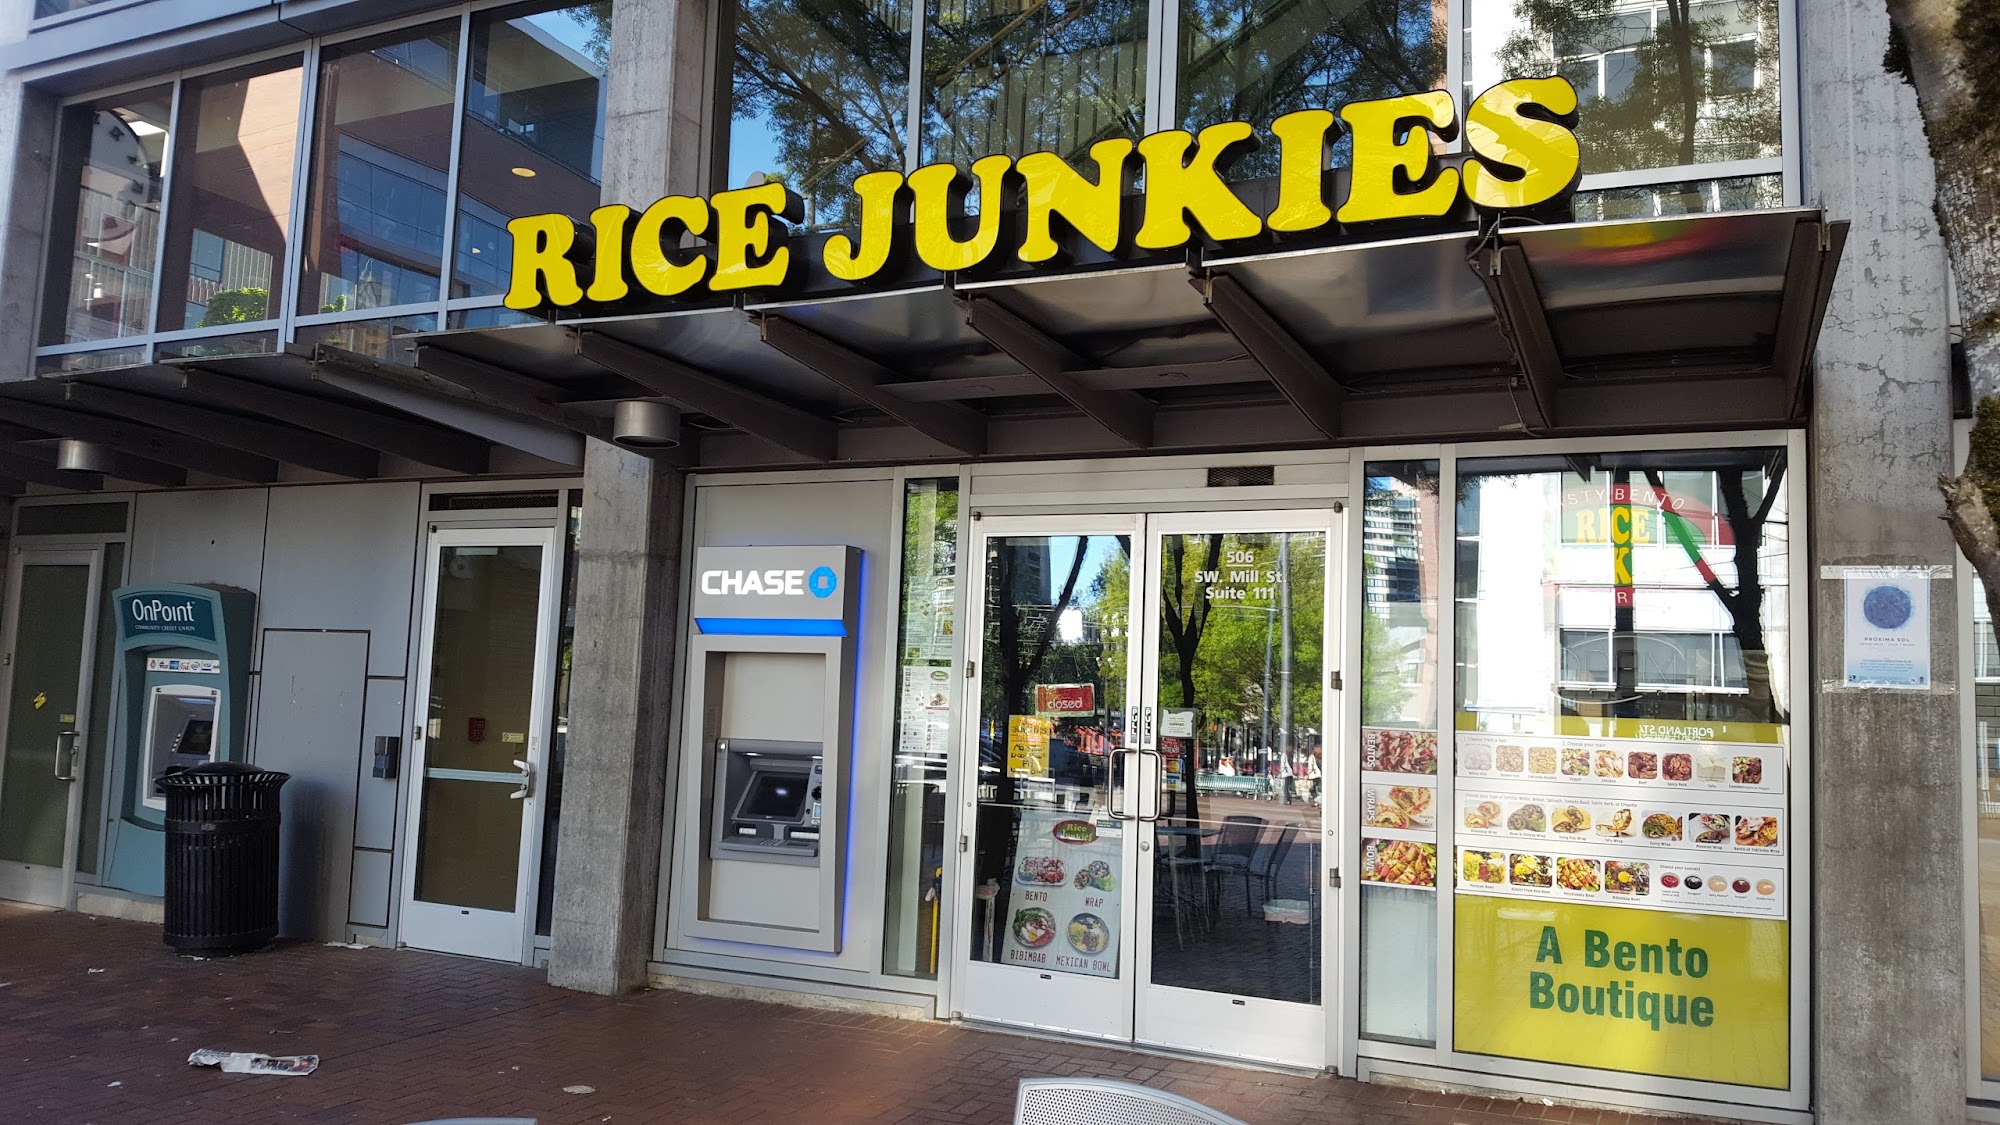 Rice Junkies